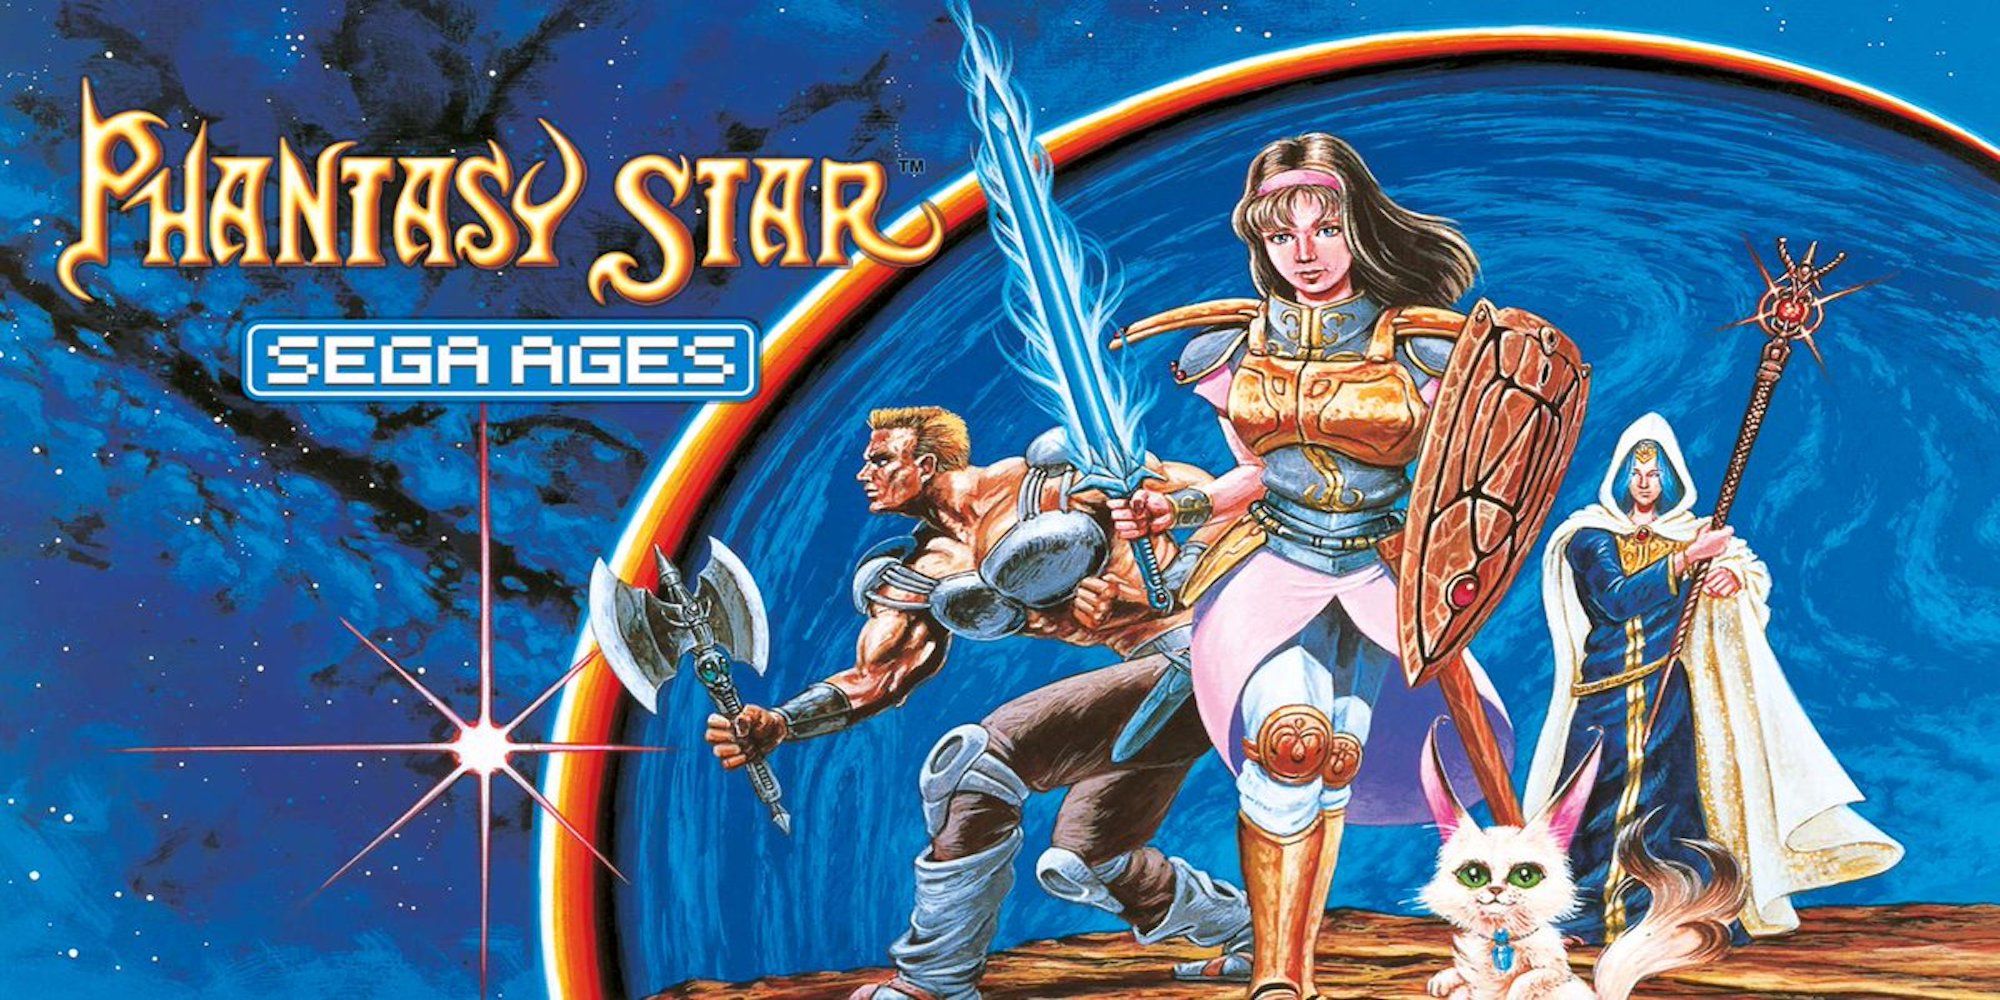 Cover art for Sega Ages: Phantasy Star